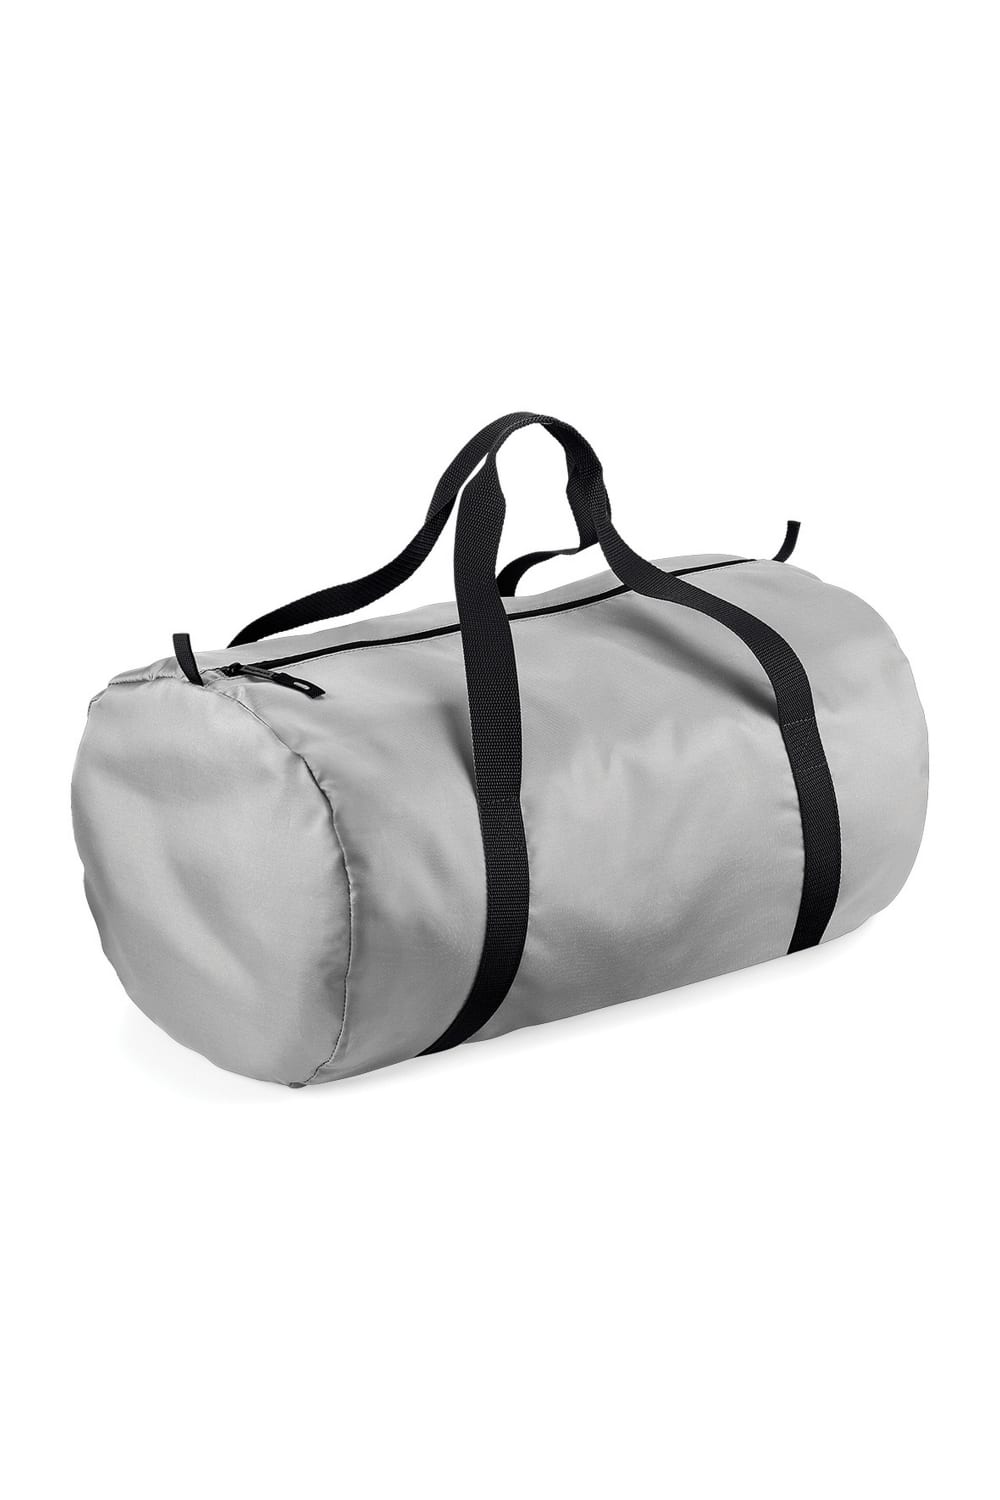 Packaway Barrel Bag/Duffel Water Resistant Travel Bag (8 Gallons) (Pack Of 2) - Silver/Black